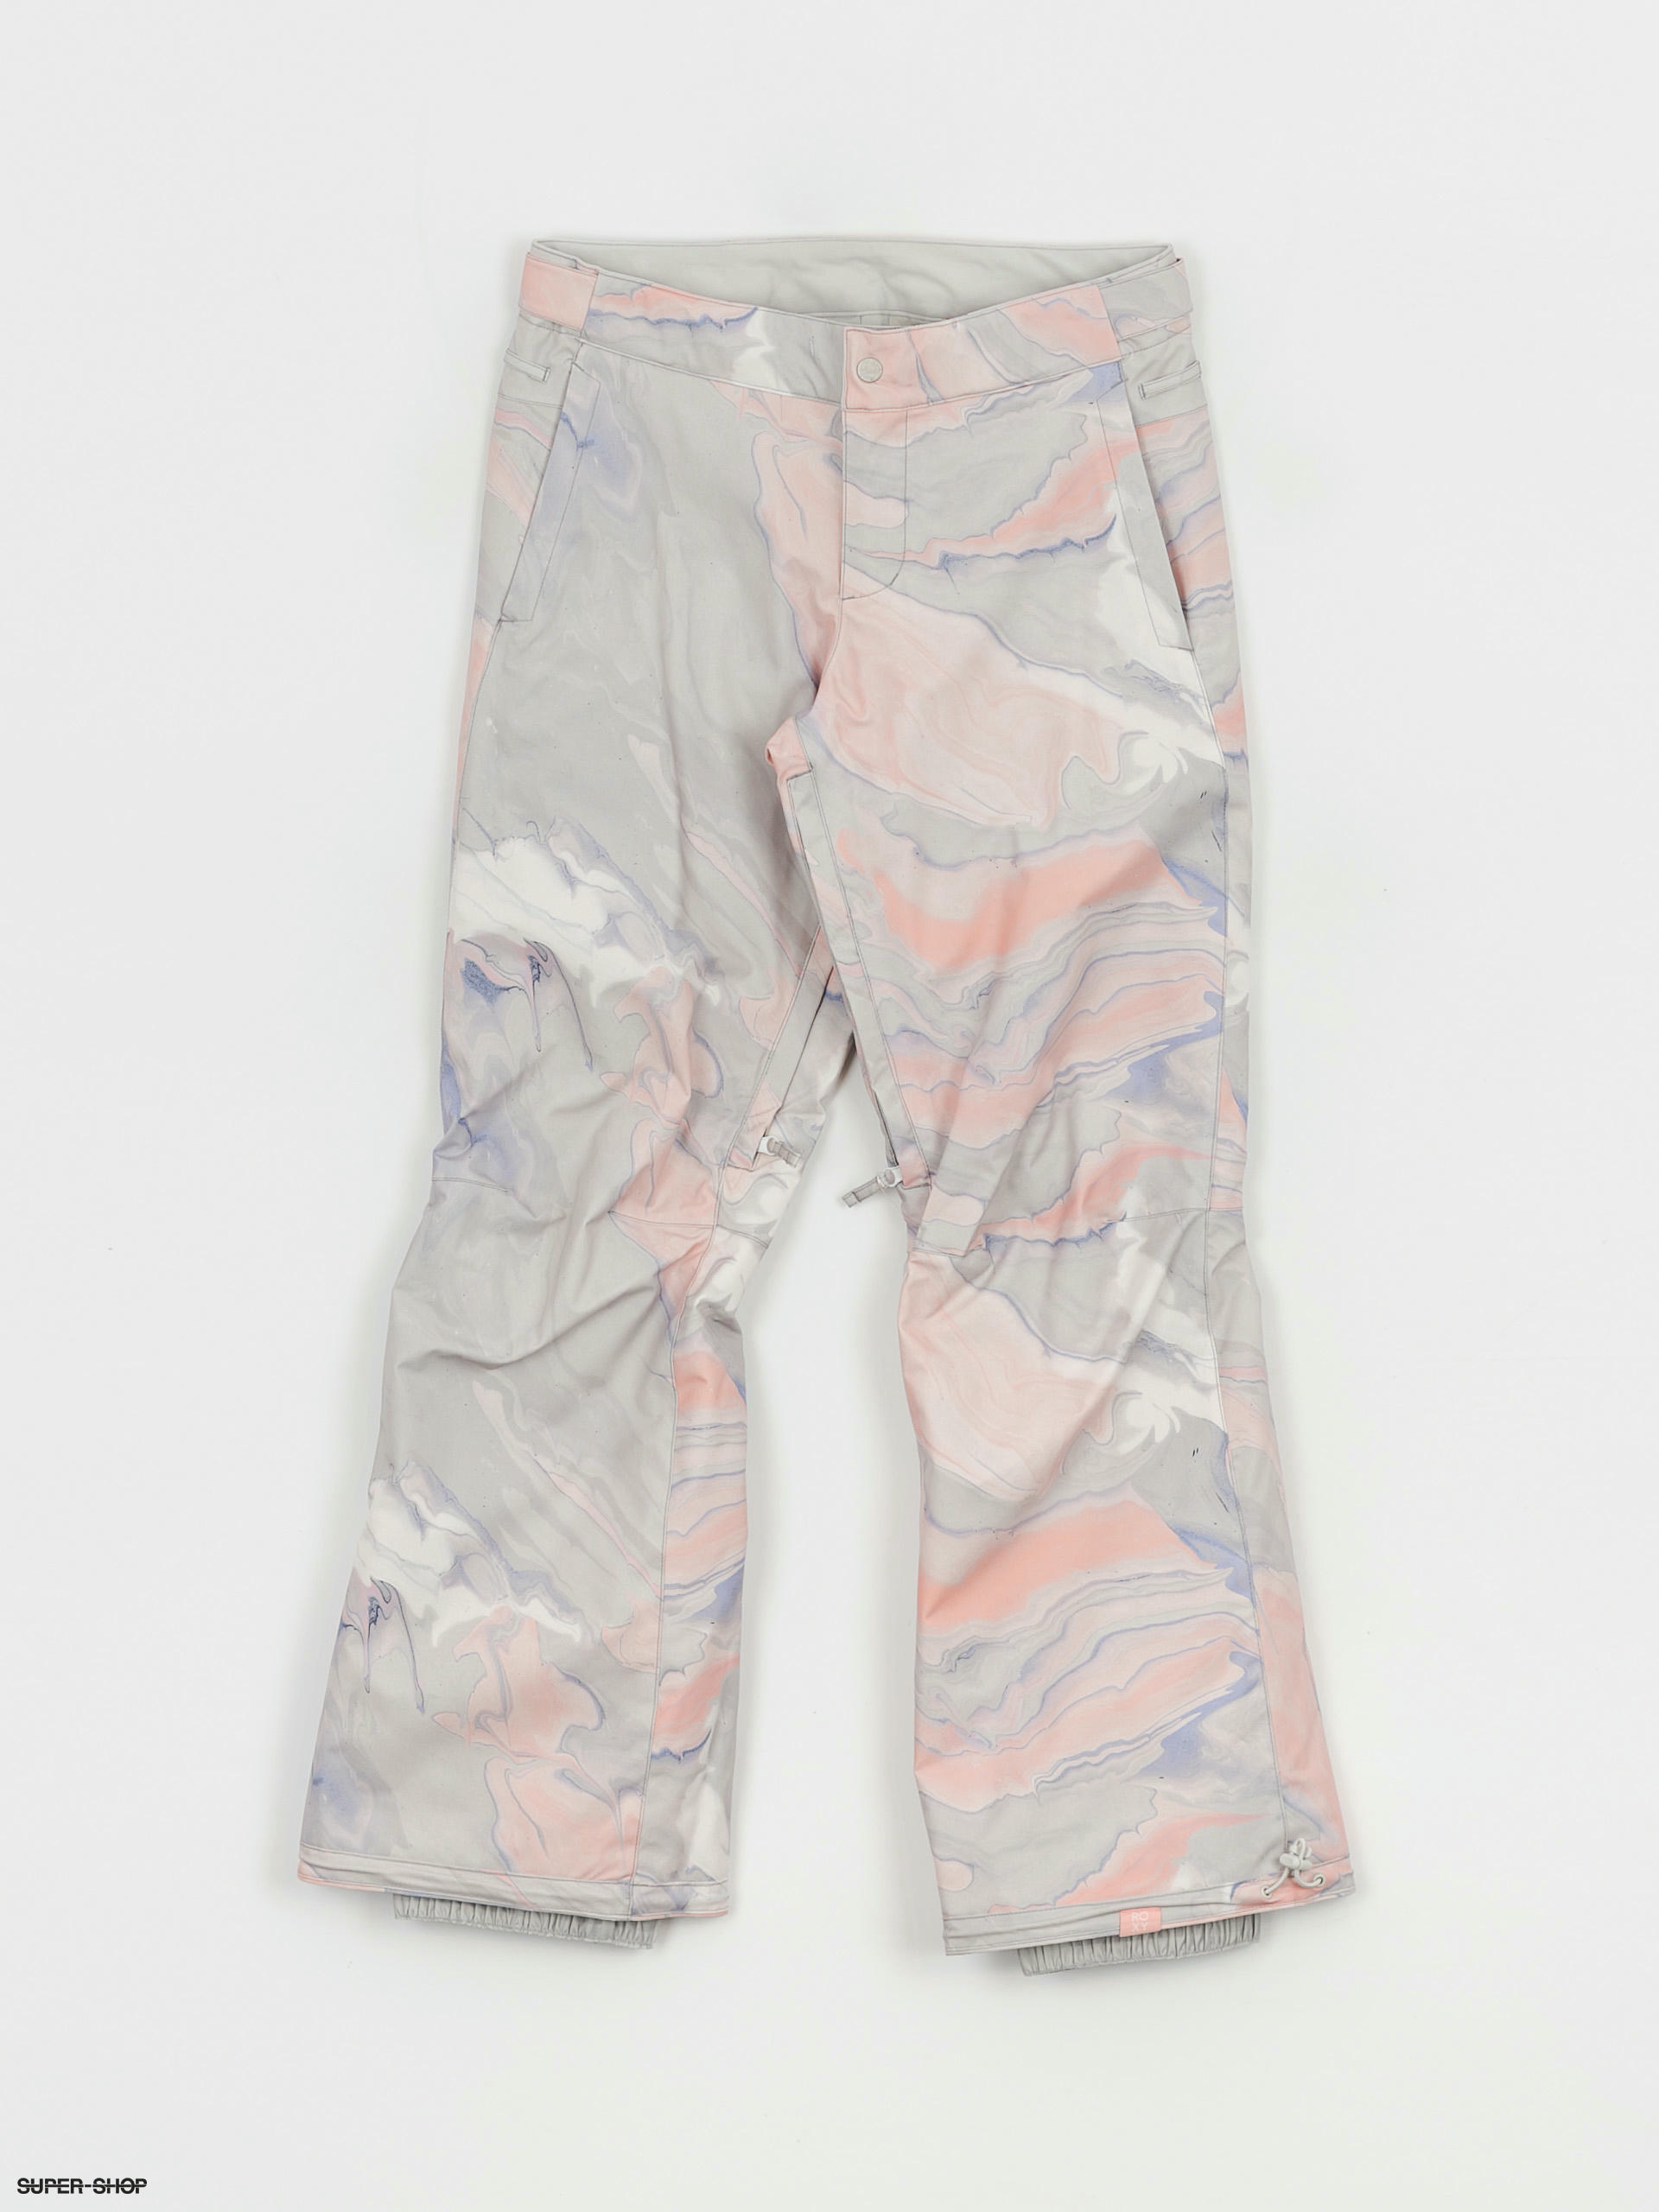 Roxy Chloe Kim Snowboard pants Wmn (gray violet marble)